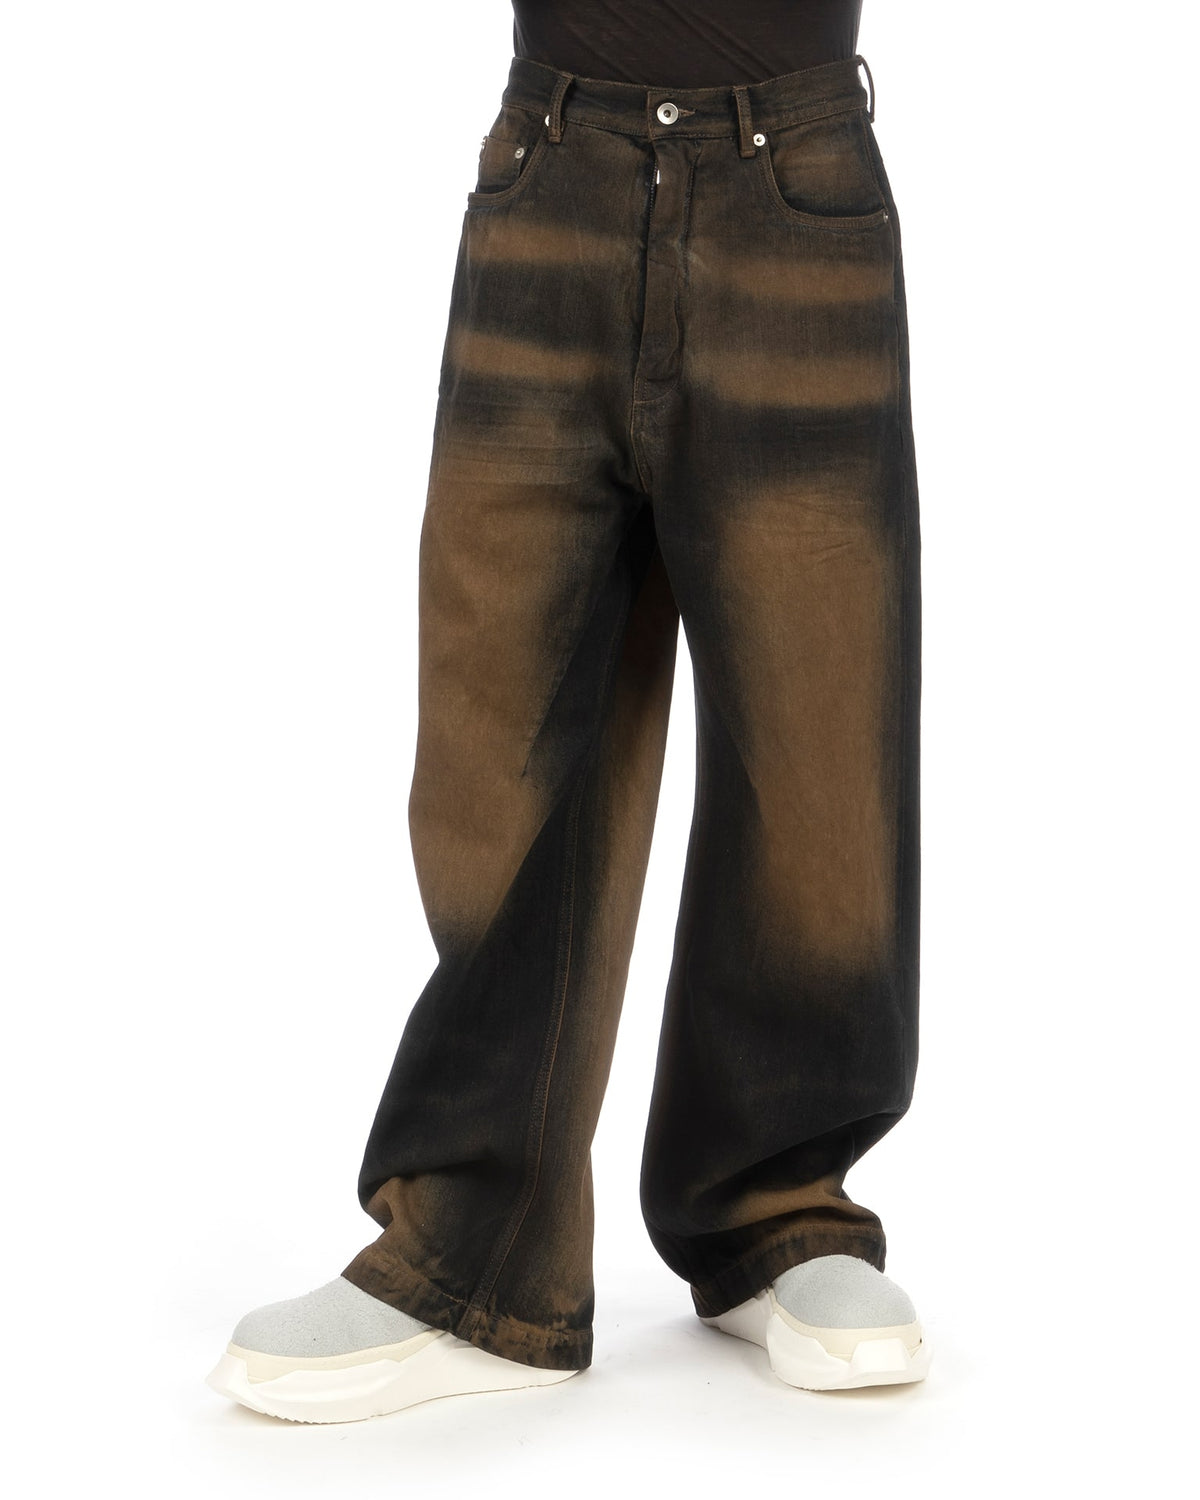 DRKSHDW by Rick Owens | Geth Jeans Denim Pants Mud - Concrete